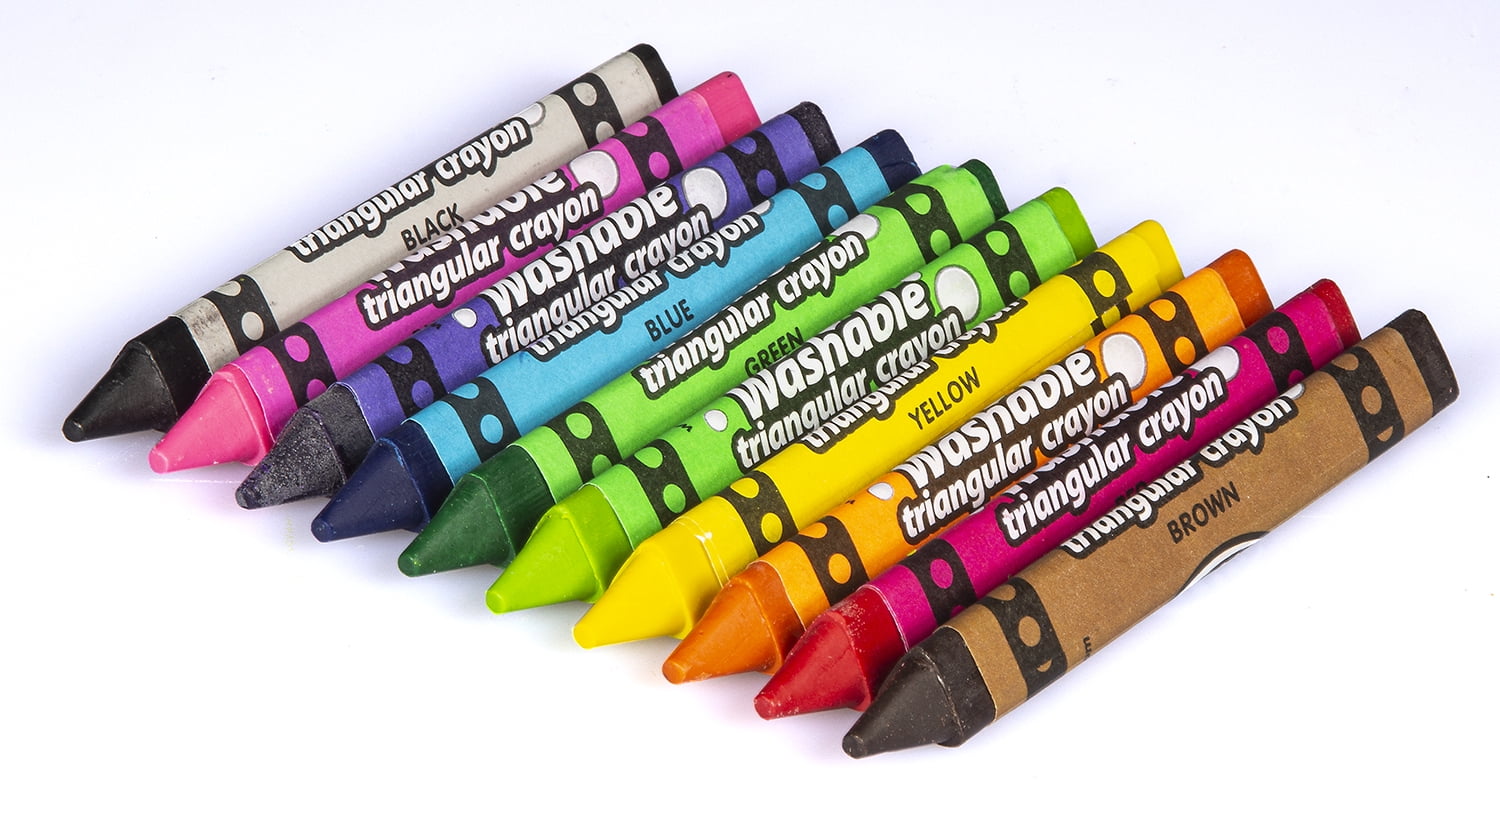 Cra-Z-Art Washable Triangular Jumbo Crayons, 10 Count